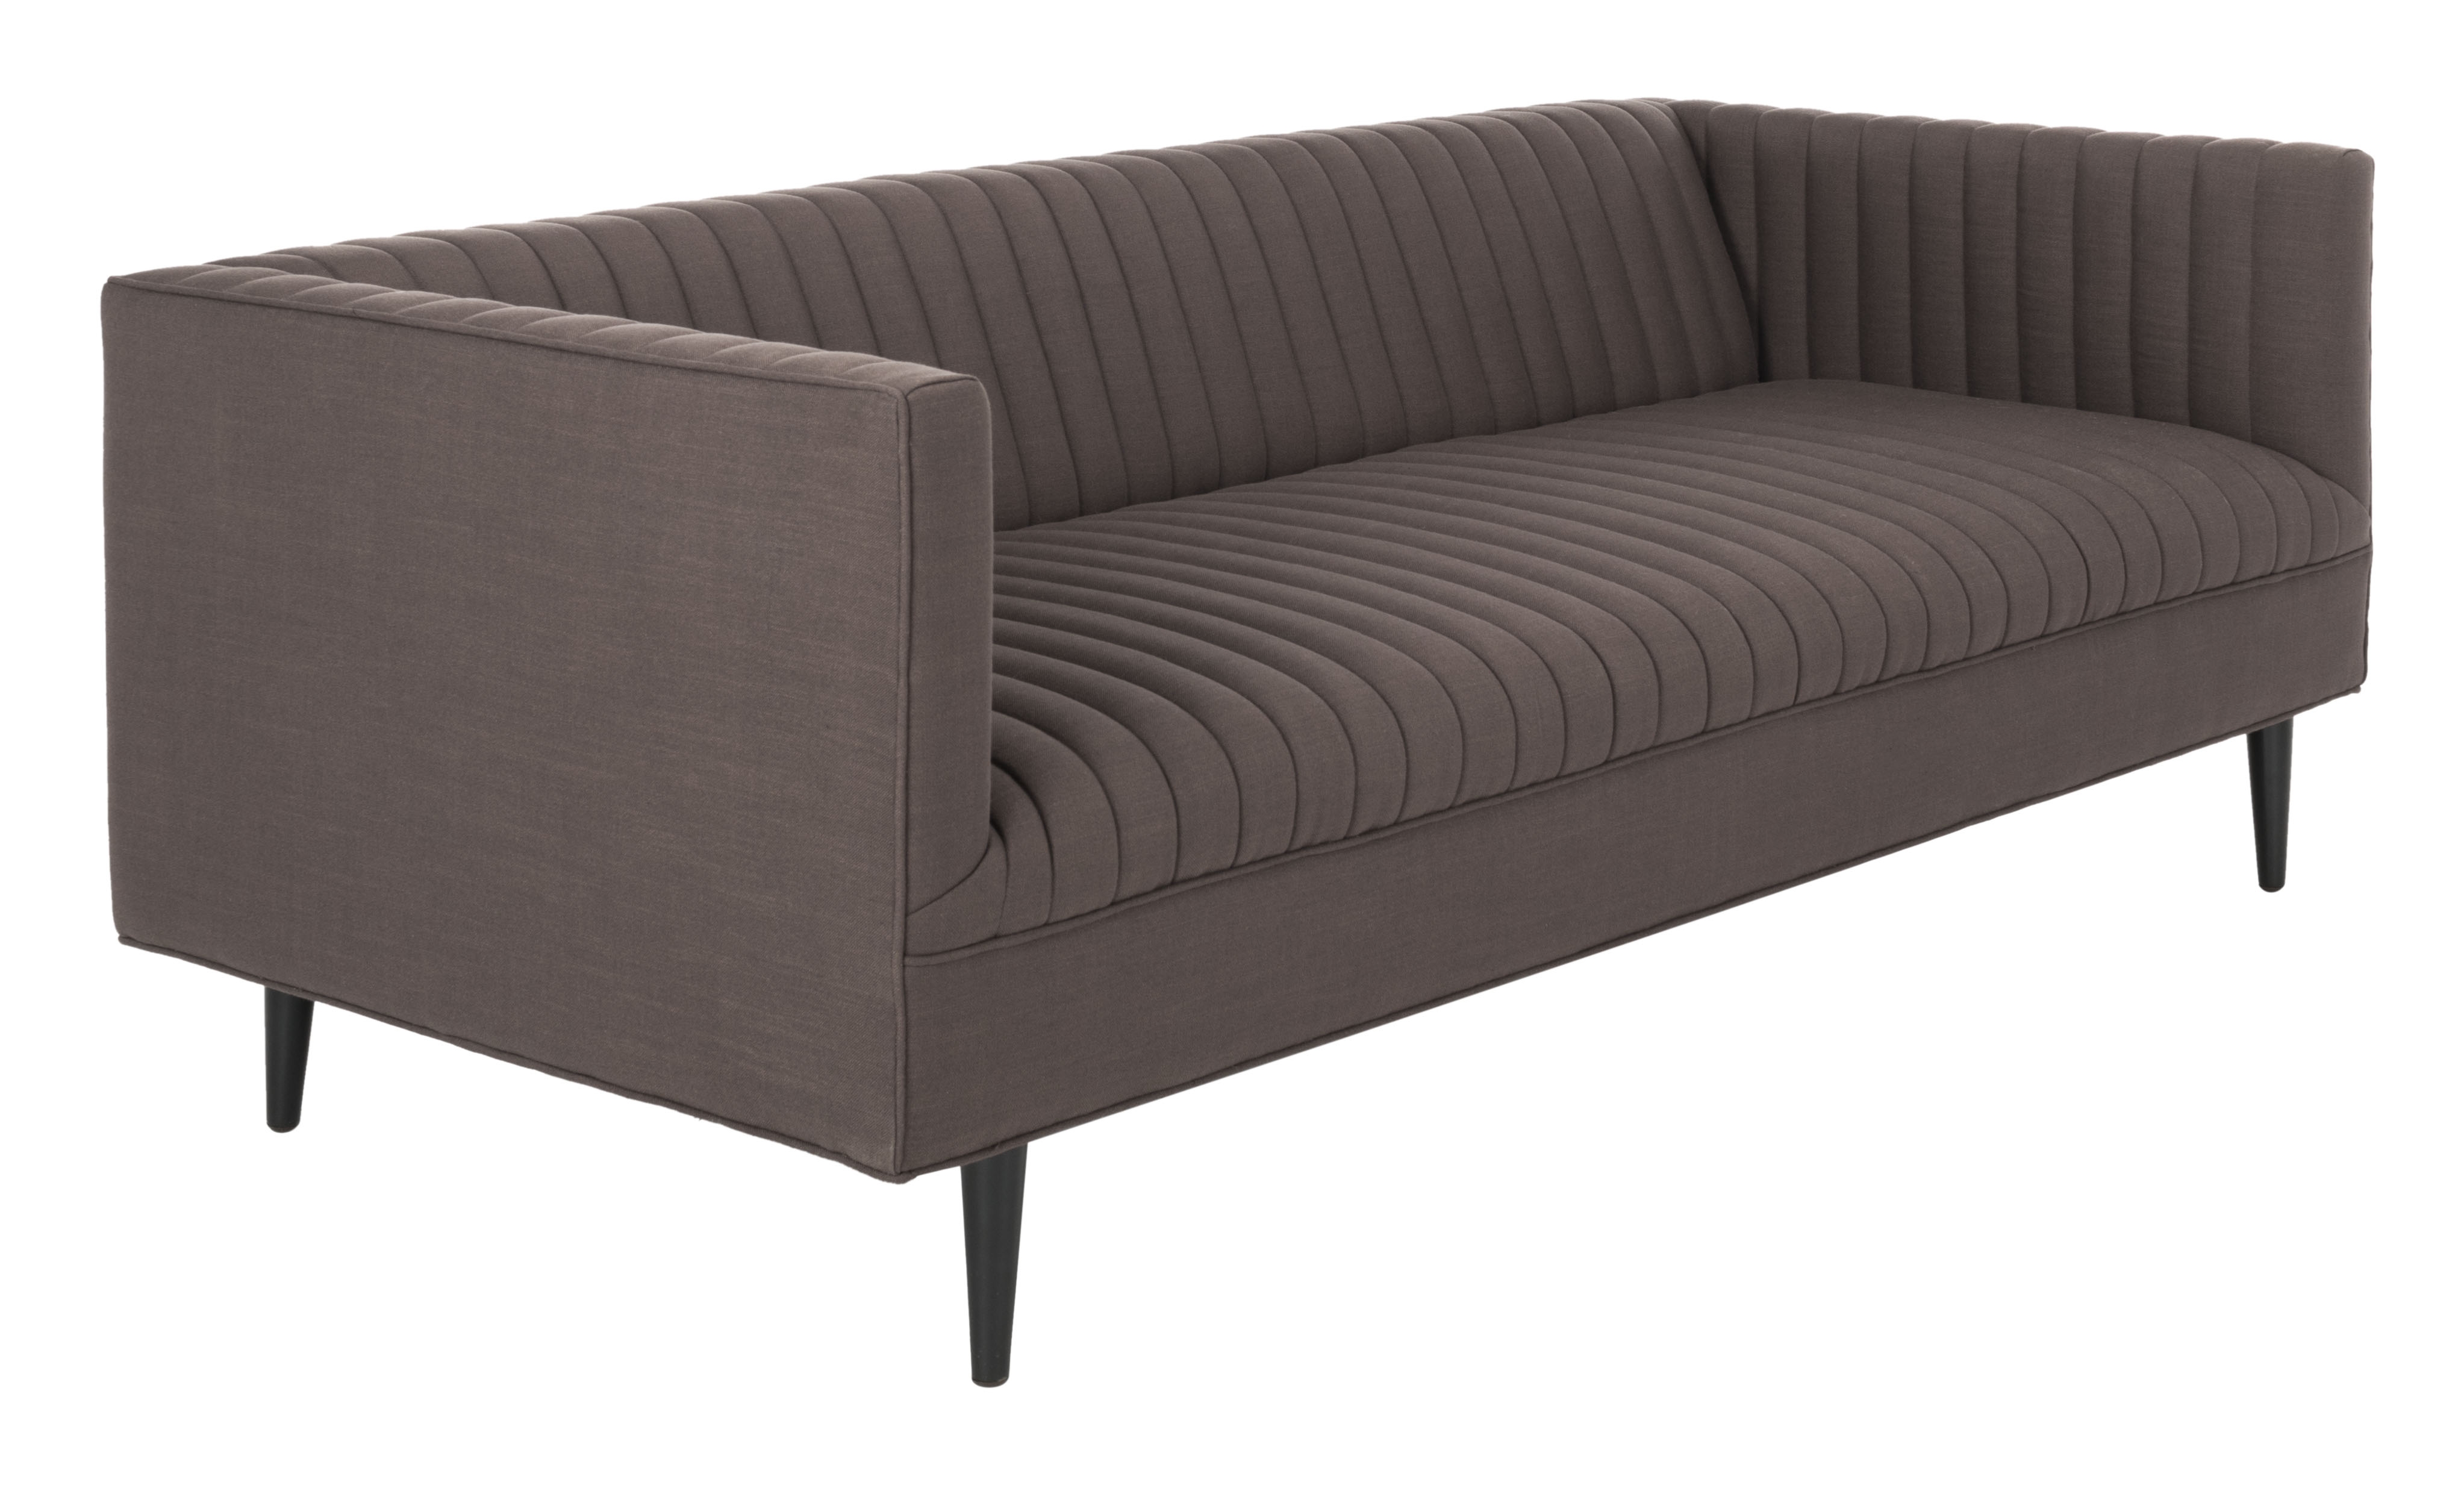 Carmina Channeled Linen Sofa - Brown - Arlo Home - Image 2